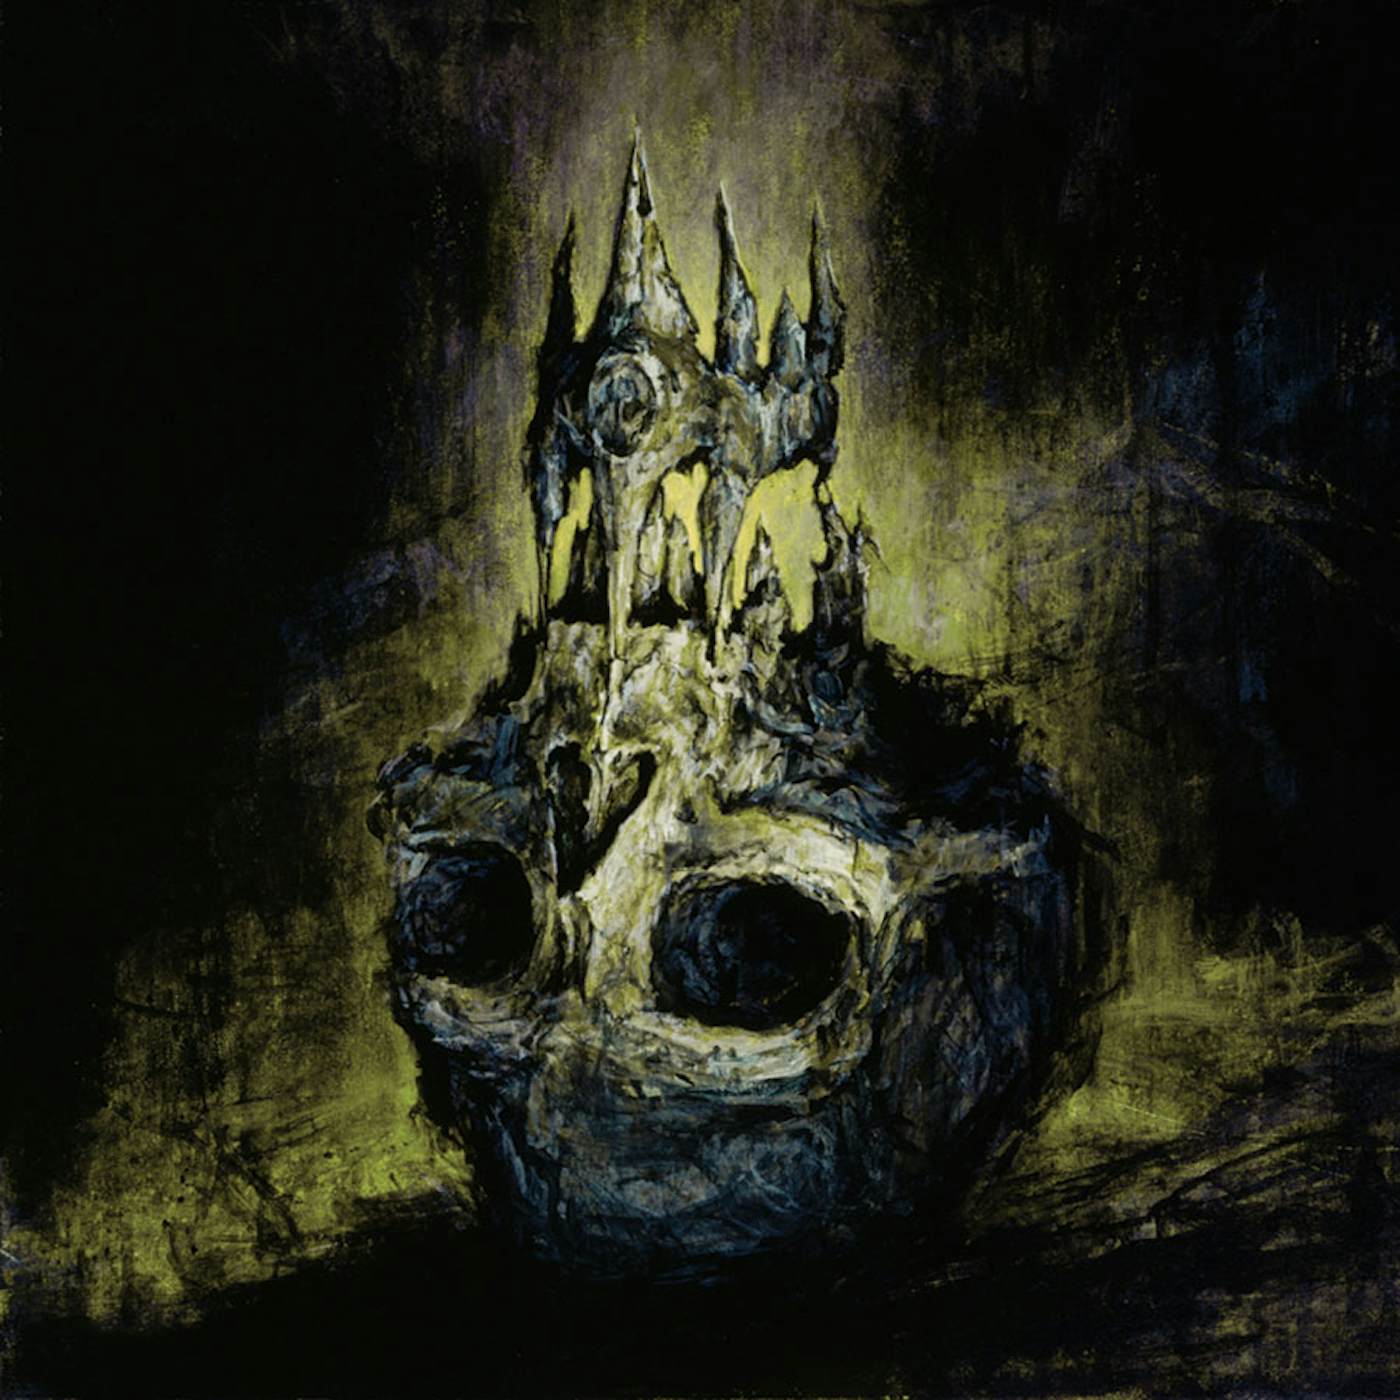 The Devil Wears Prada Dead Throne Vinyl Record